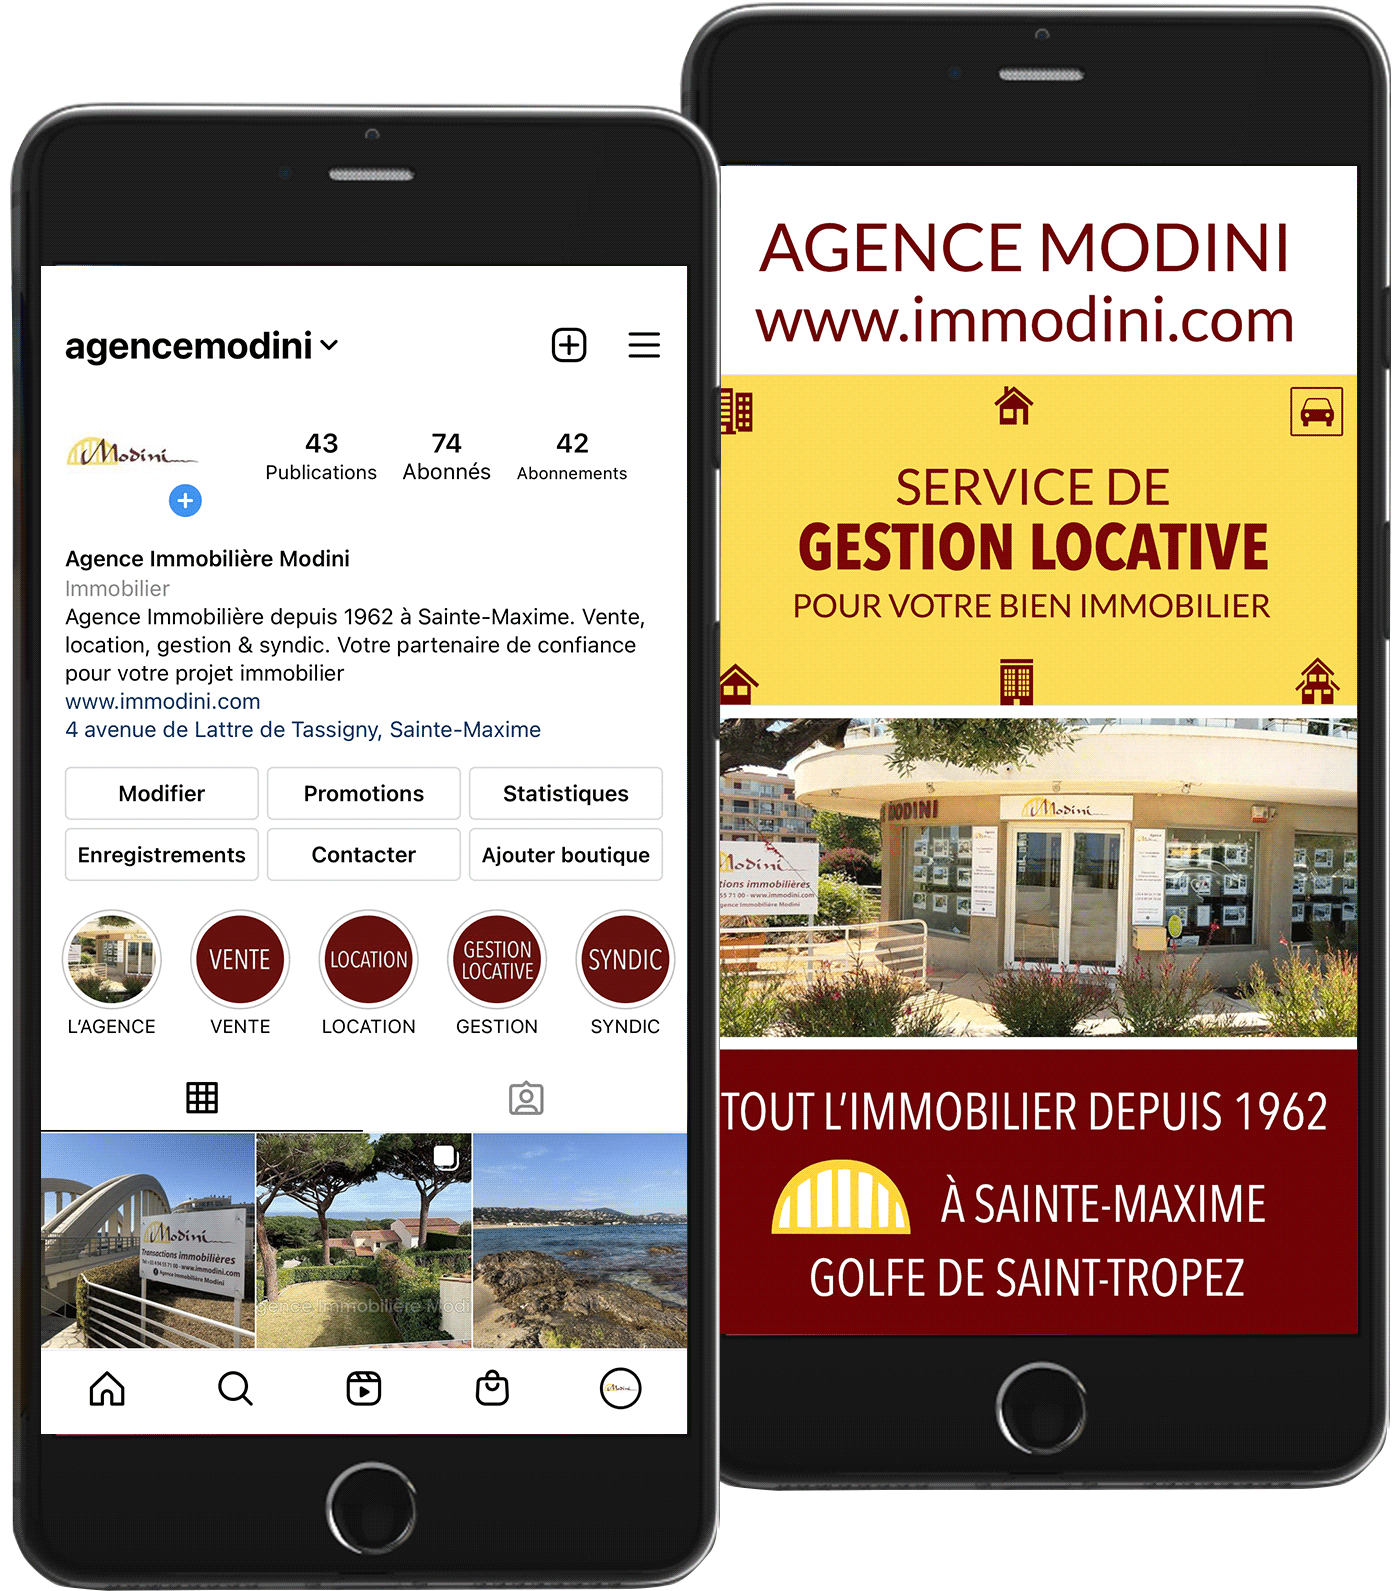 digykan communication digitale instagram Agence Immobilière Modini Sainte-Maxime visuel